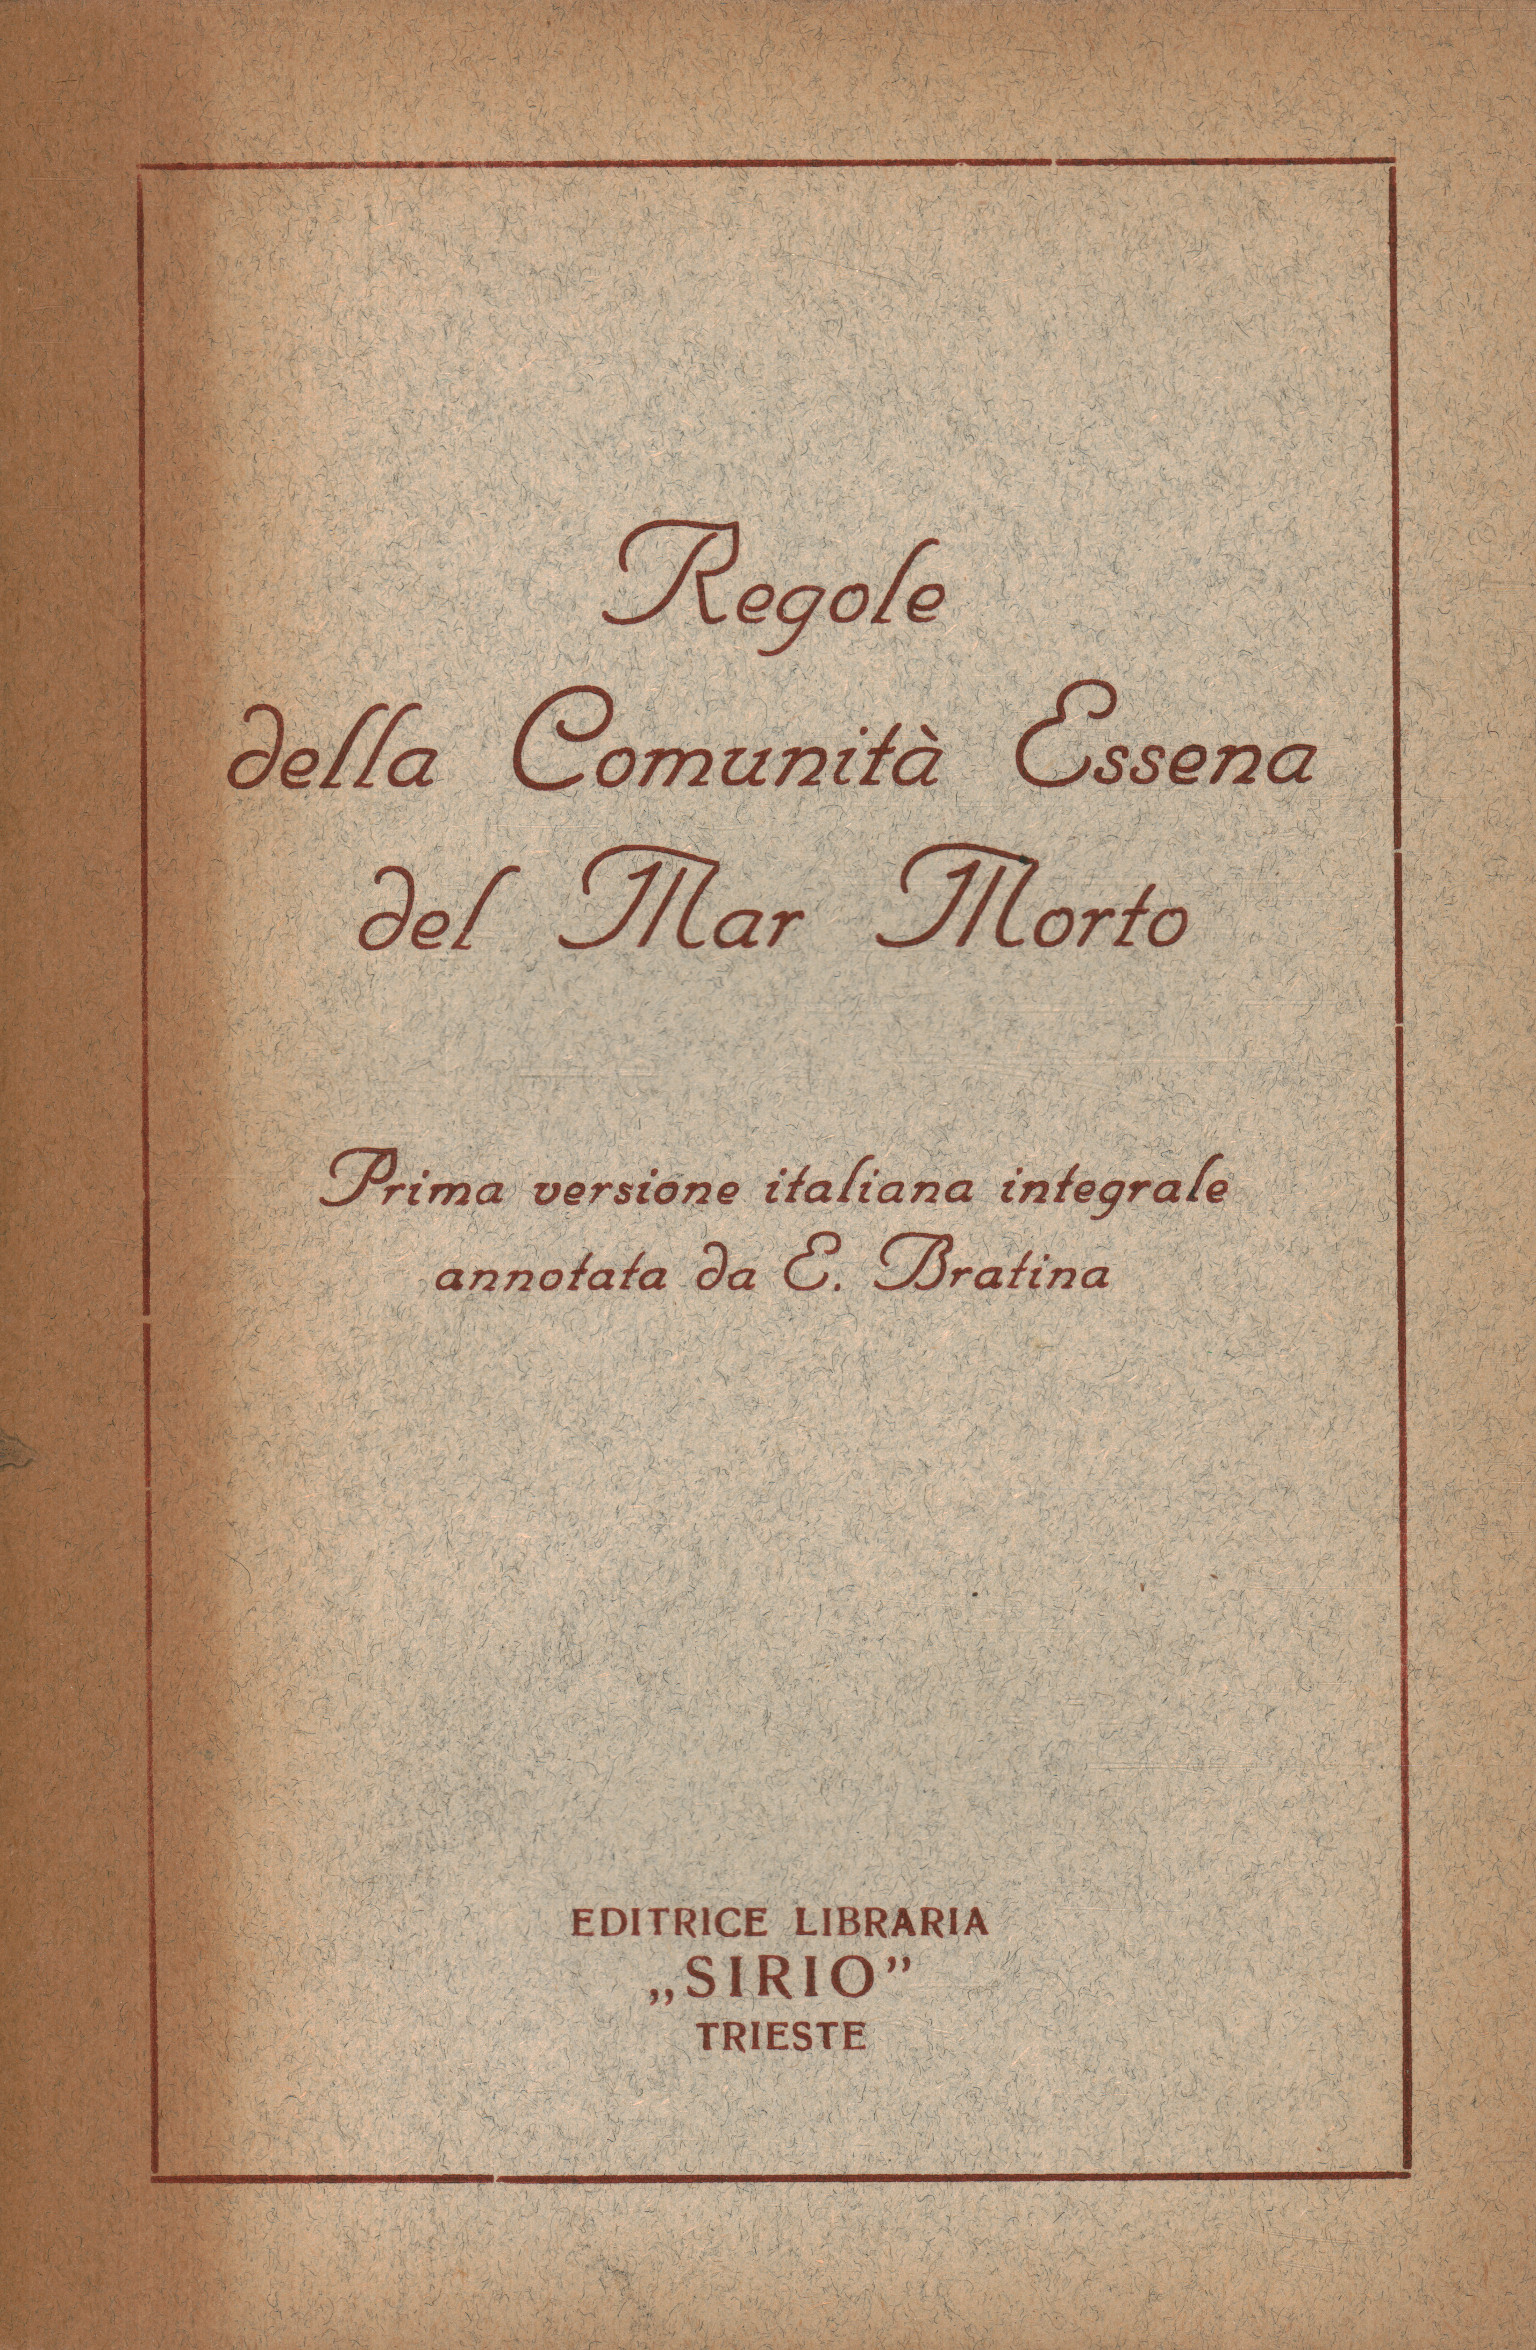 Rules of the Essene Community of Ma